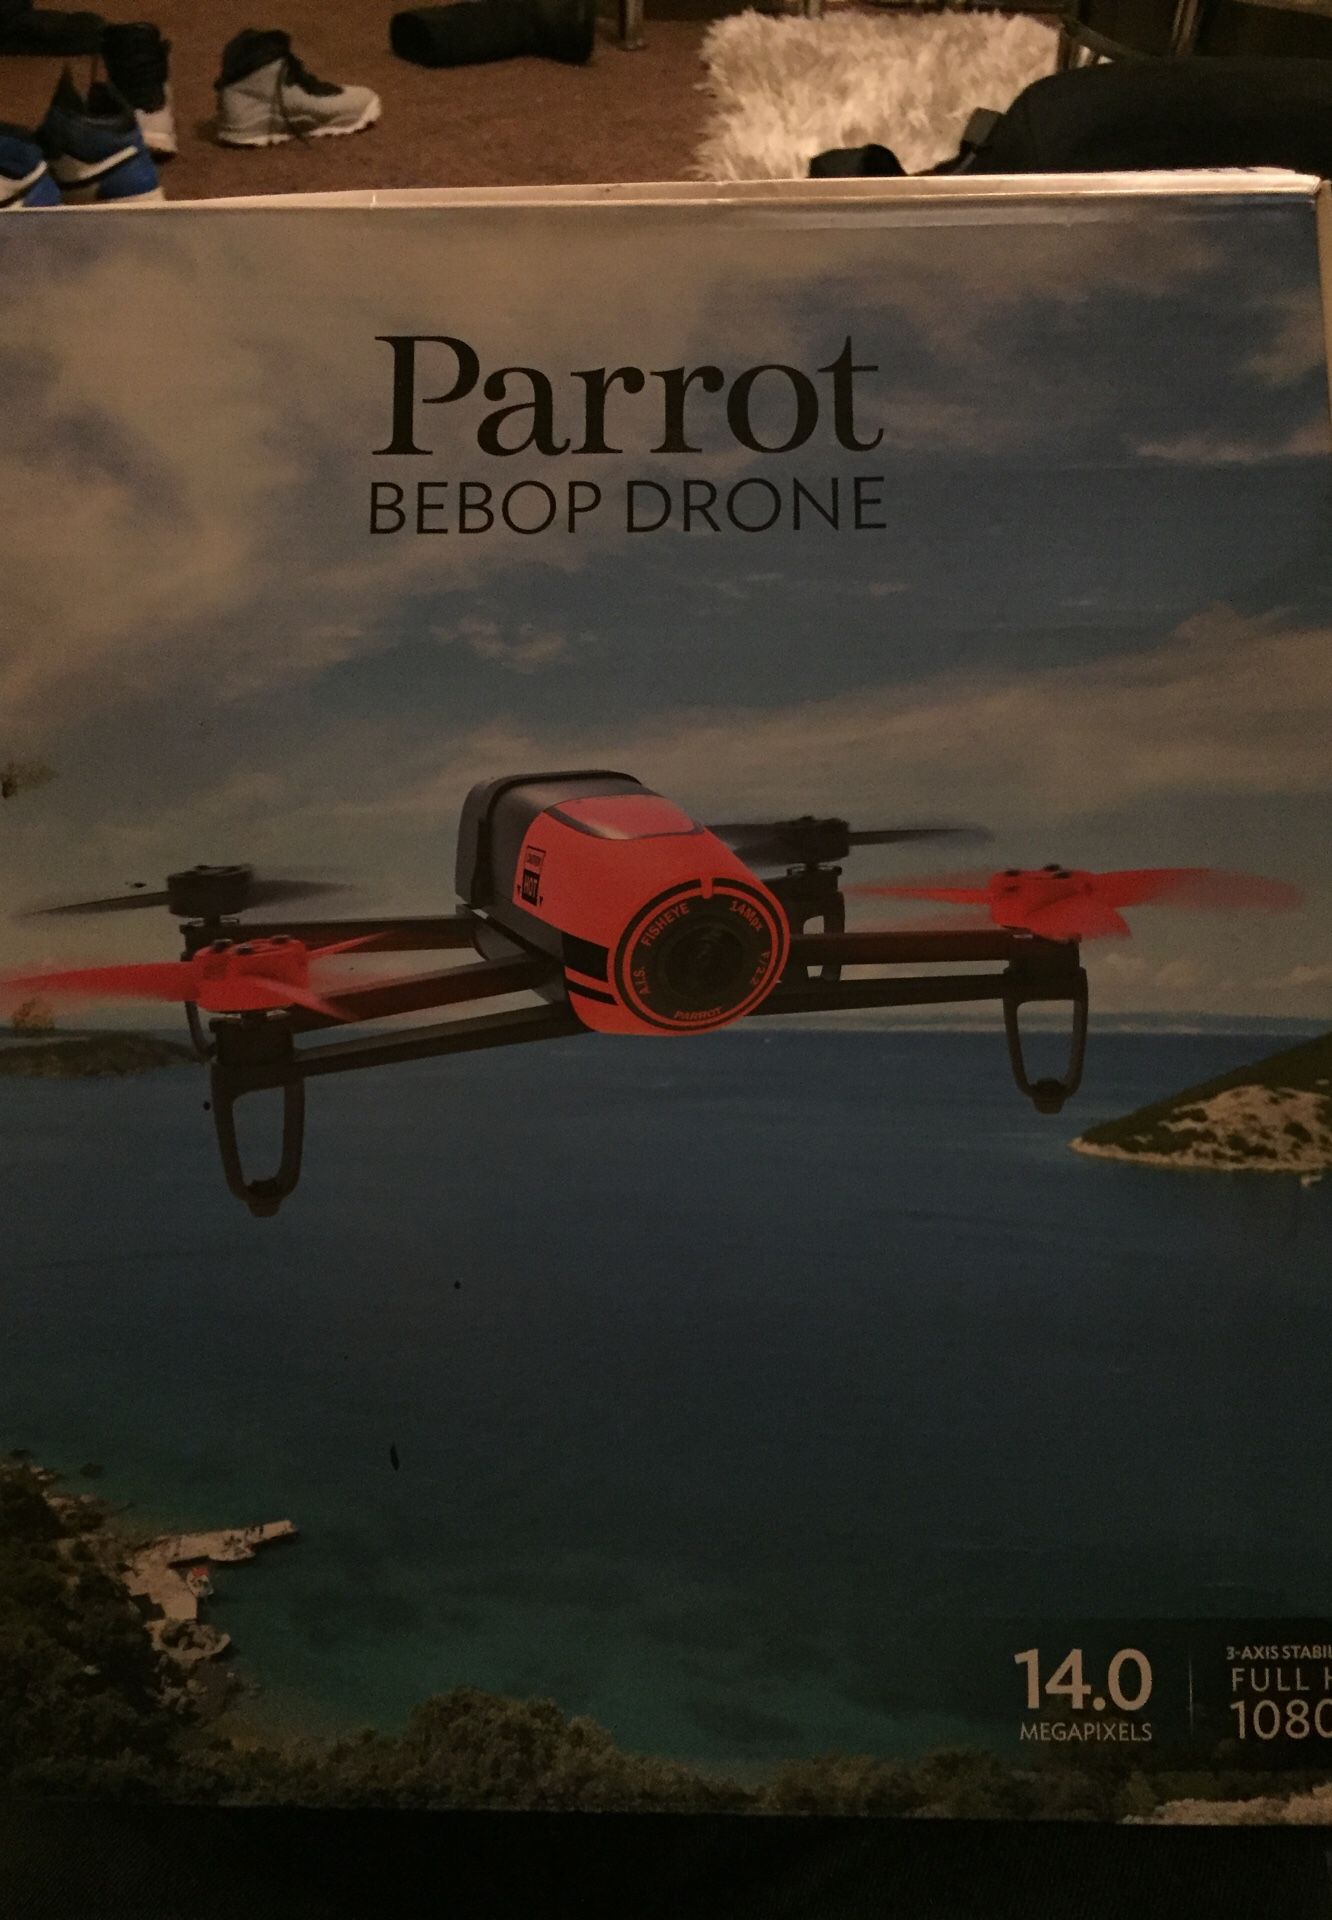 Parrot bebop drone